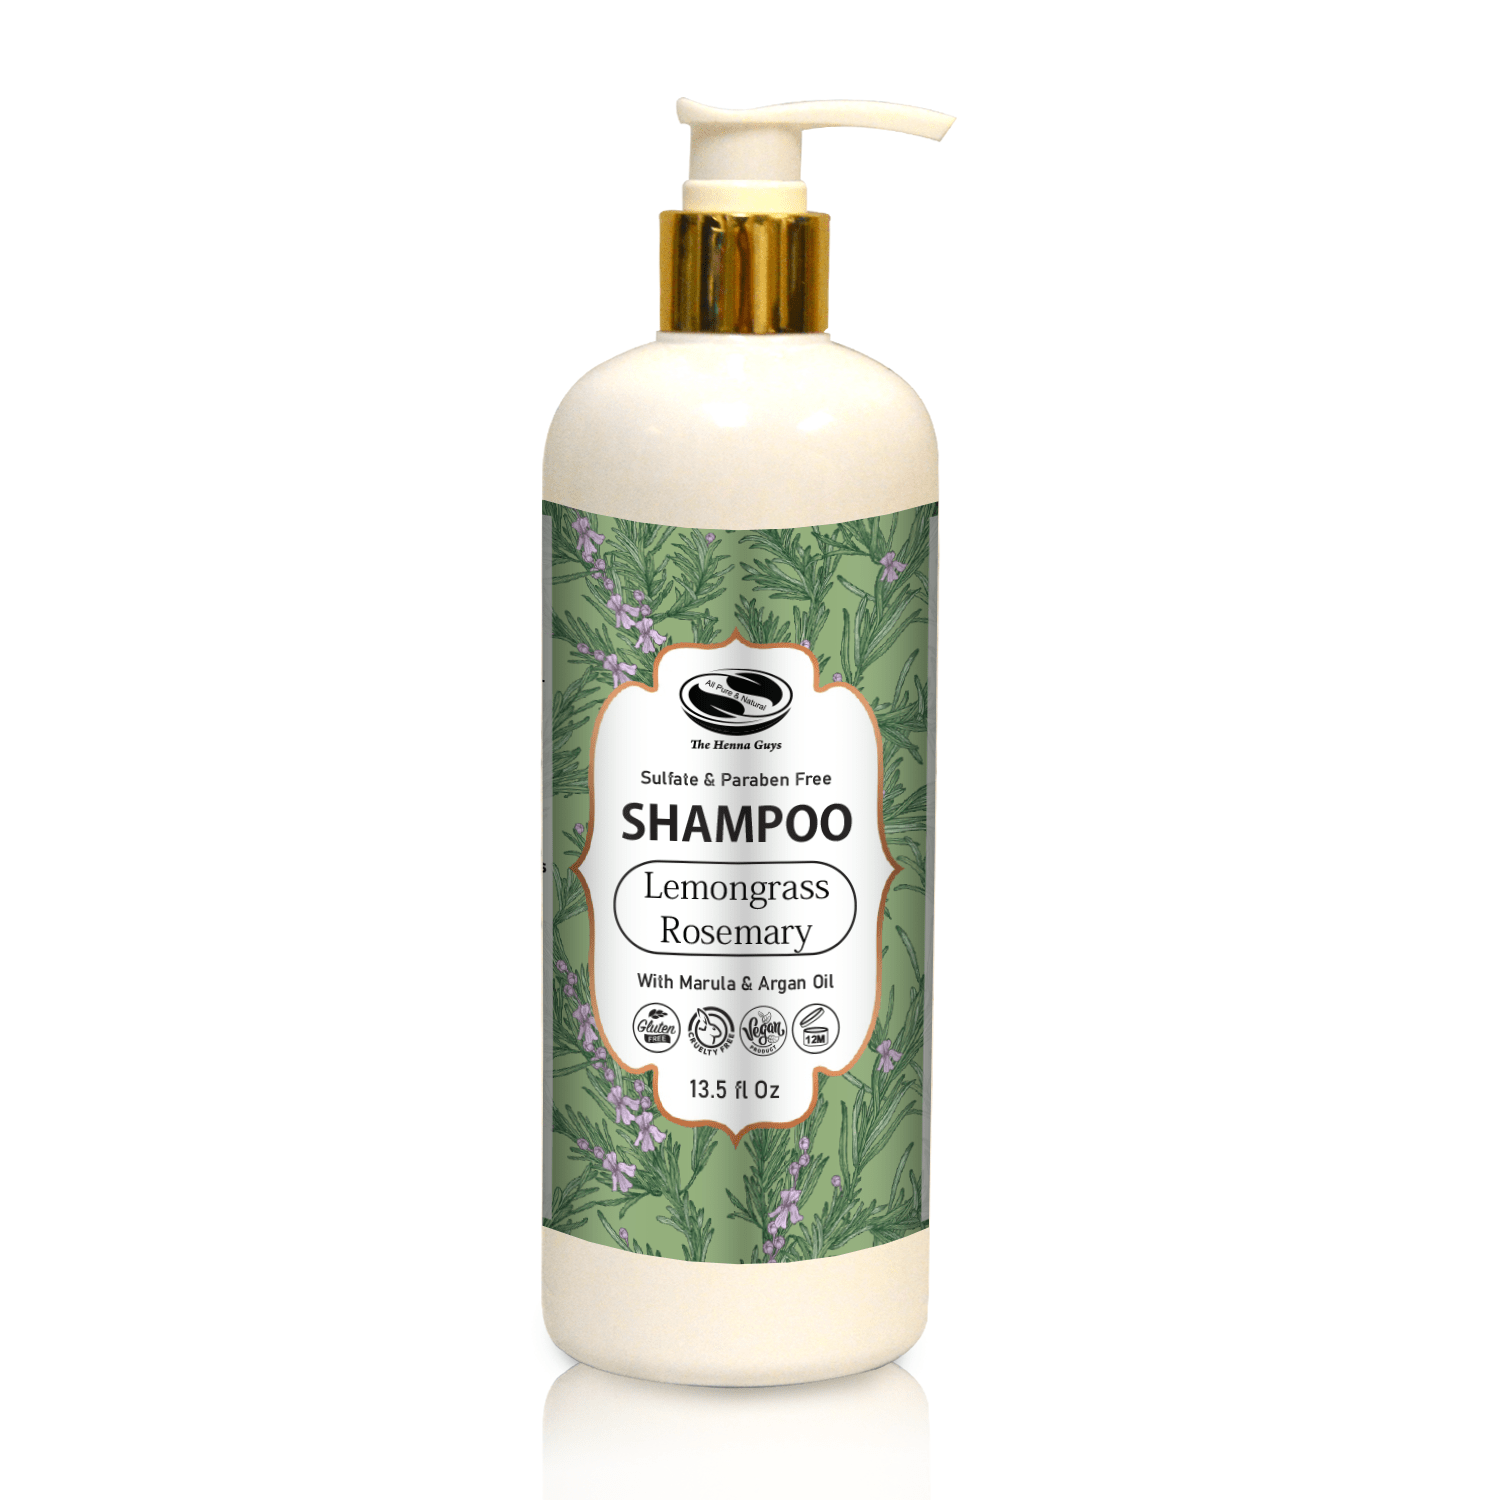 Shampoo & Conditioners Suggestion